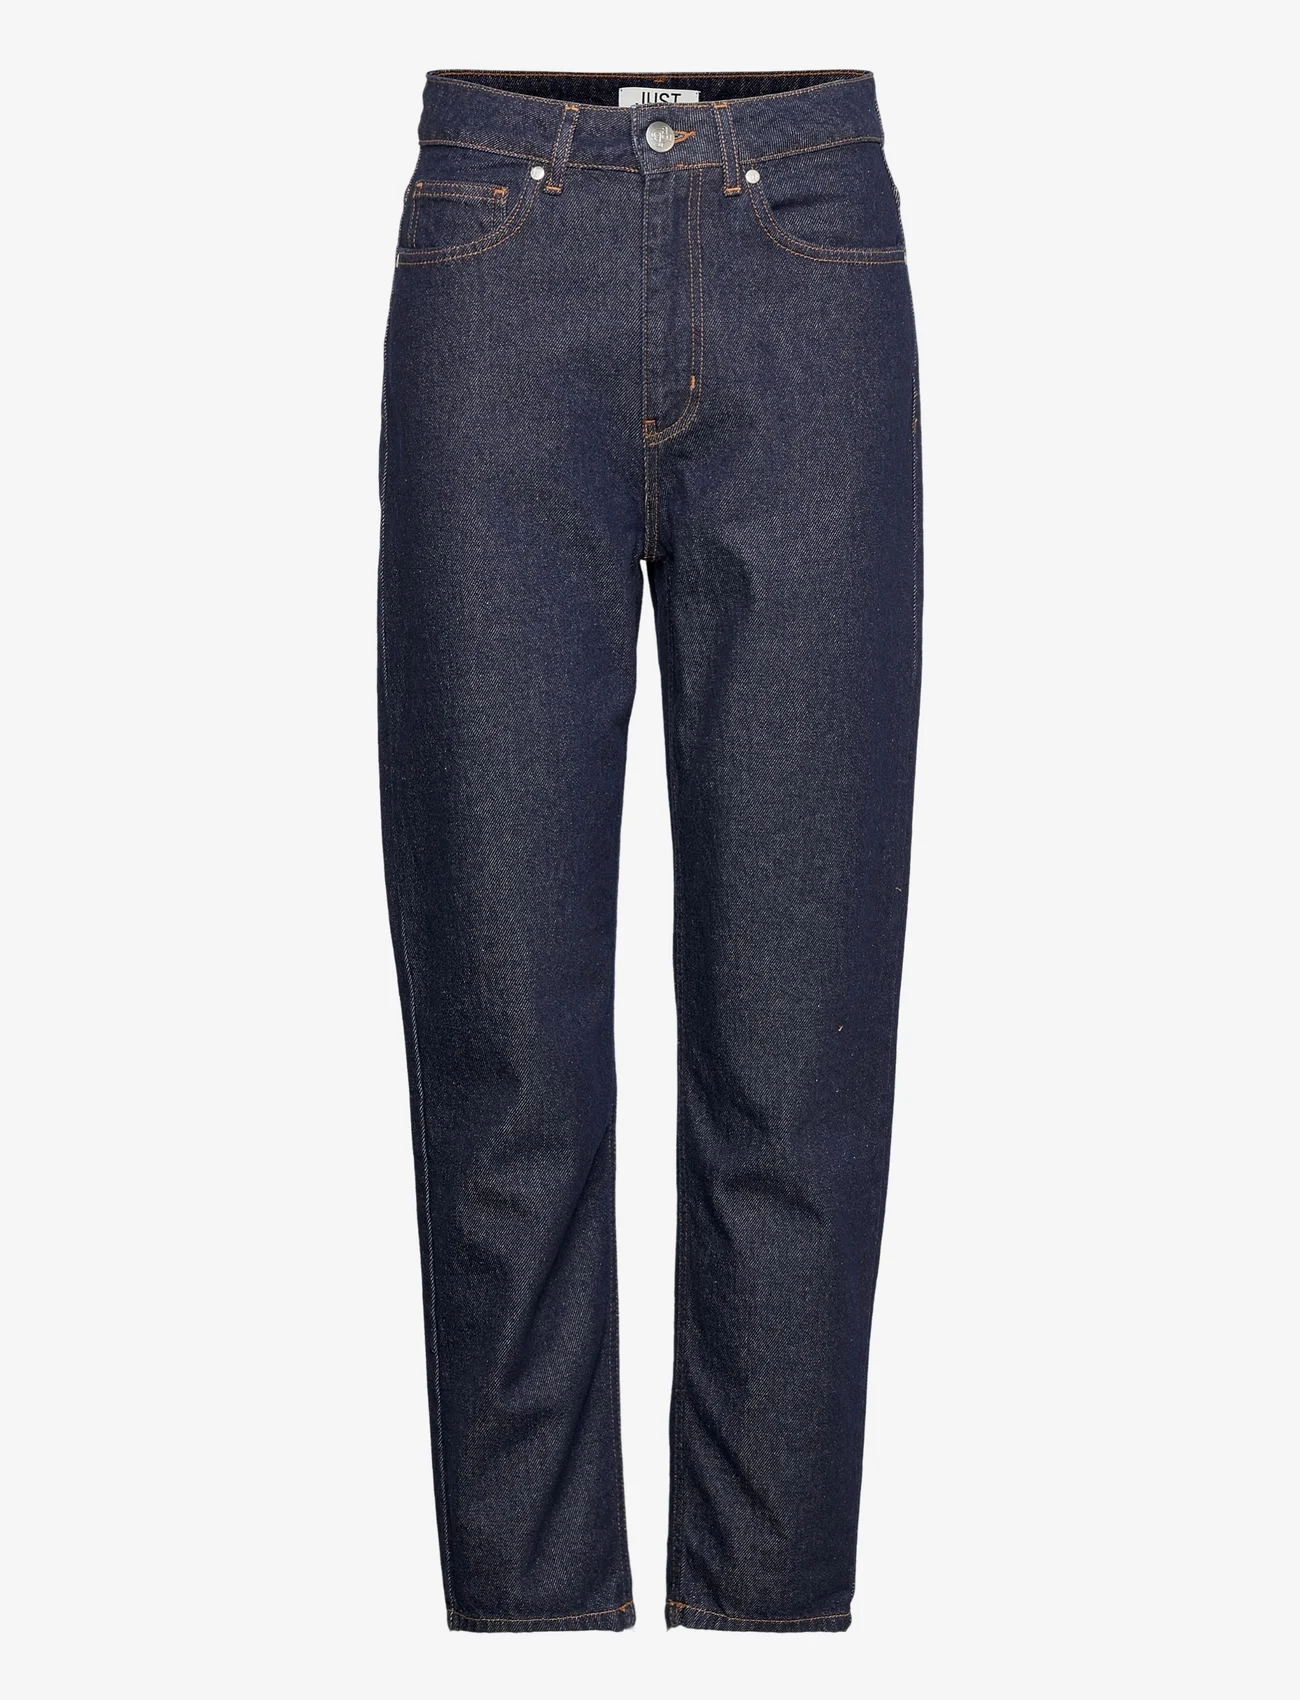 Just Female - Stormy jeans 0103 - proste dżinsy - blue rinse - 0